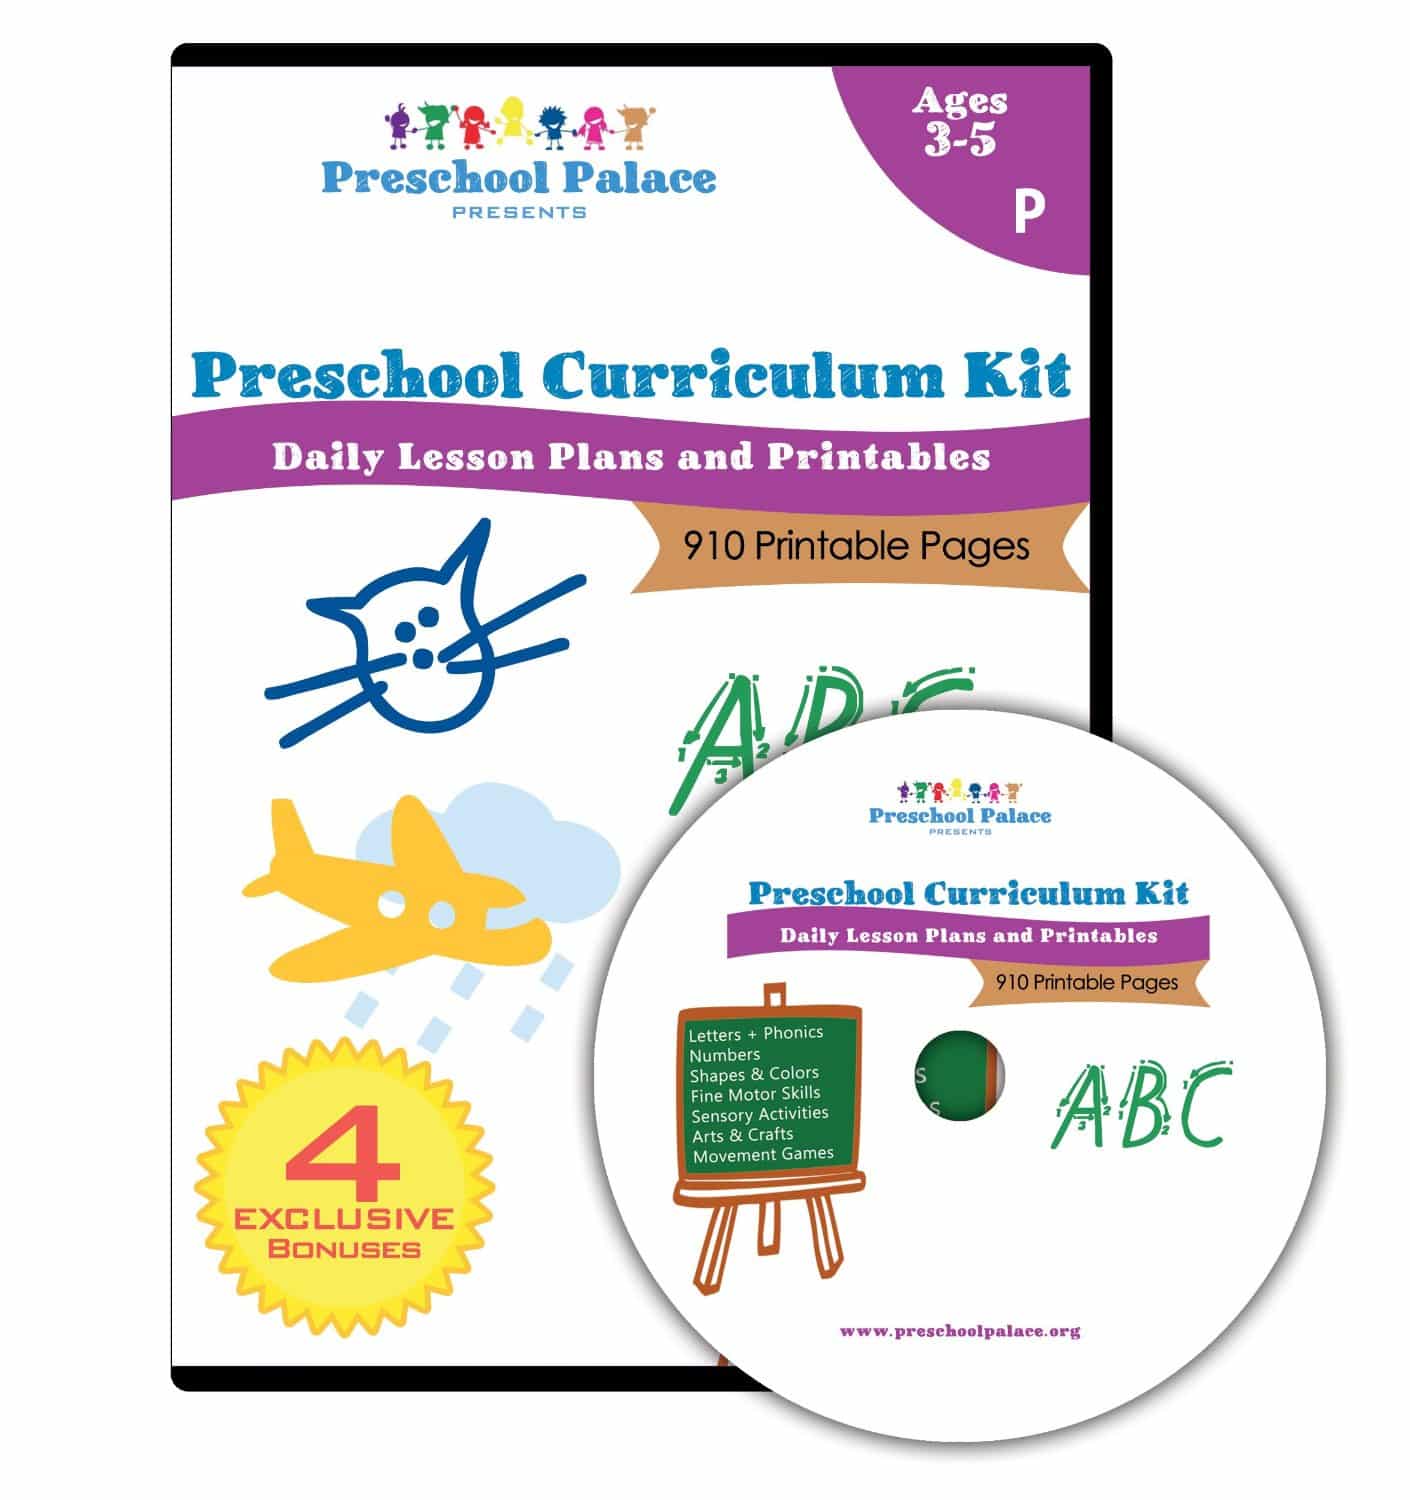 DEAL ALERT: The Ultimate Preschool Curriculum Kit – 25% off